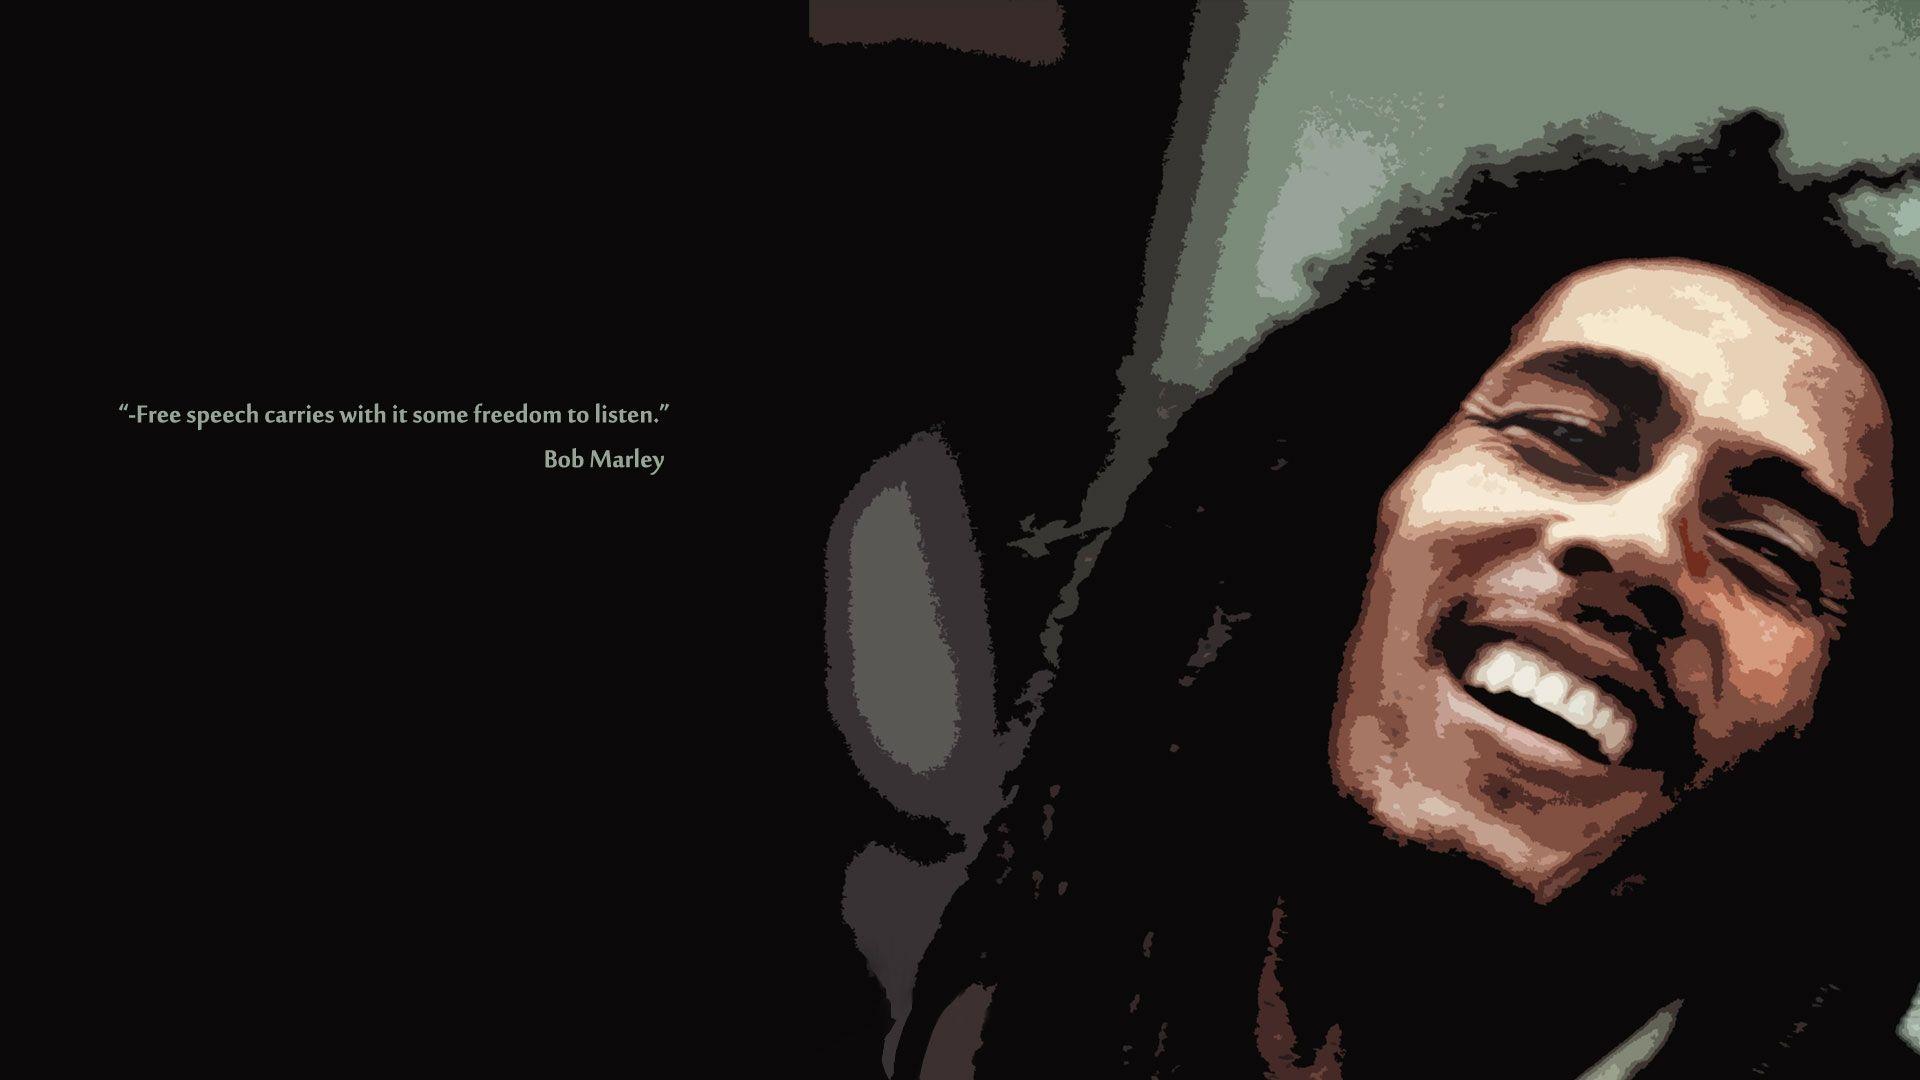 Wallpaper, quote, dreadlocks, phrase, Bob Marley, smile, beard